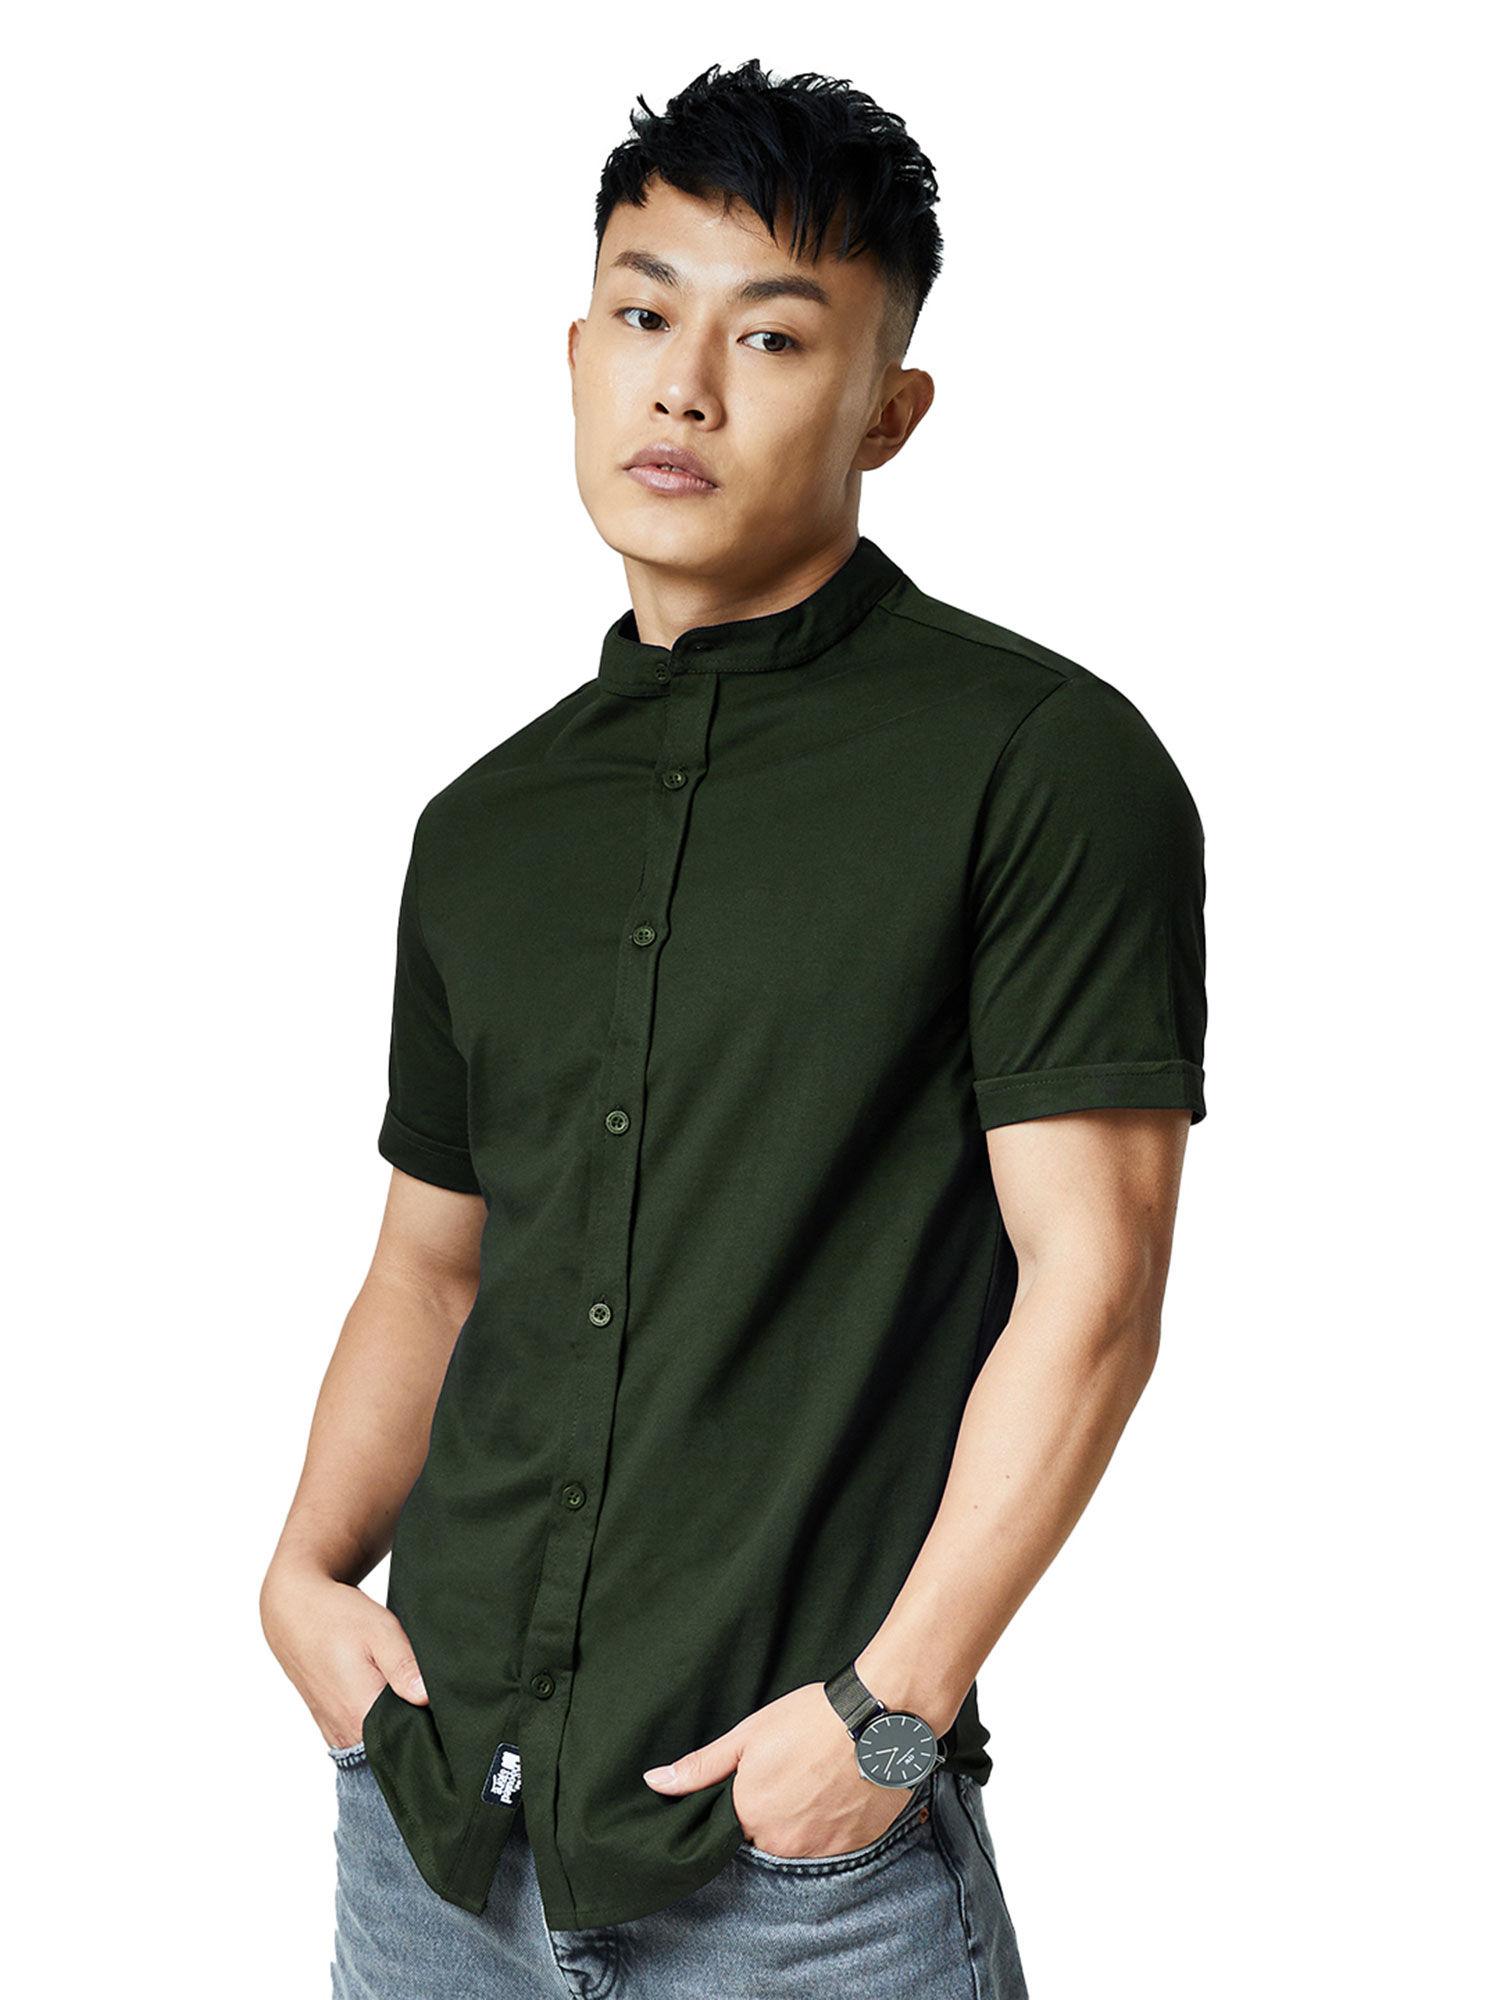 solid dark green knit shirts for men